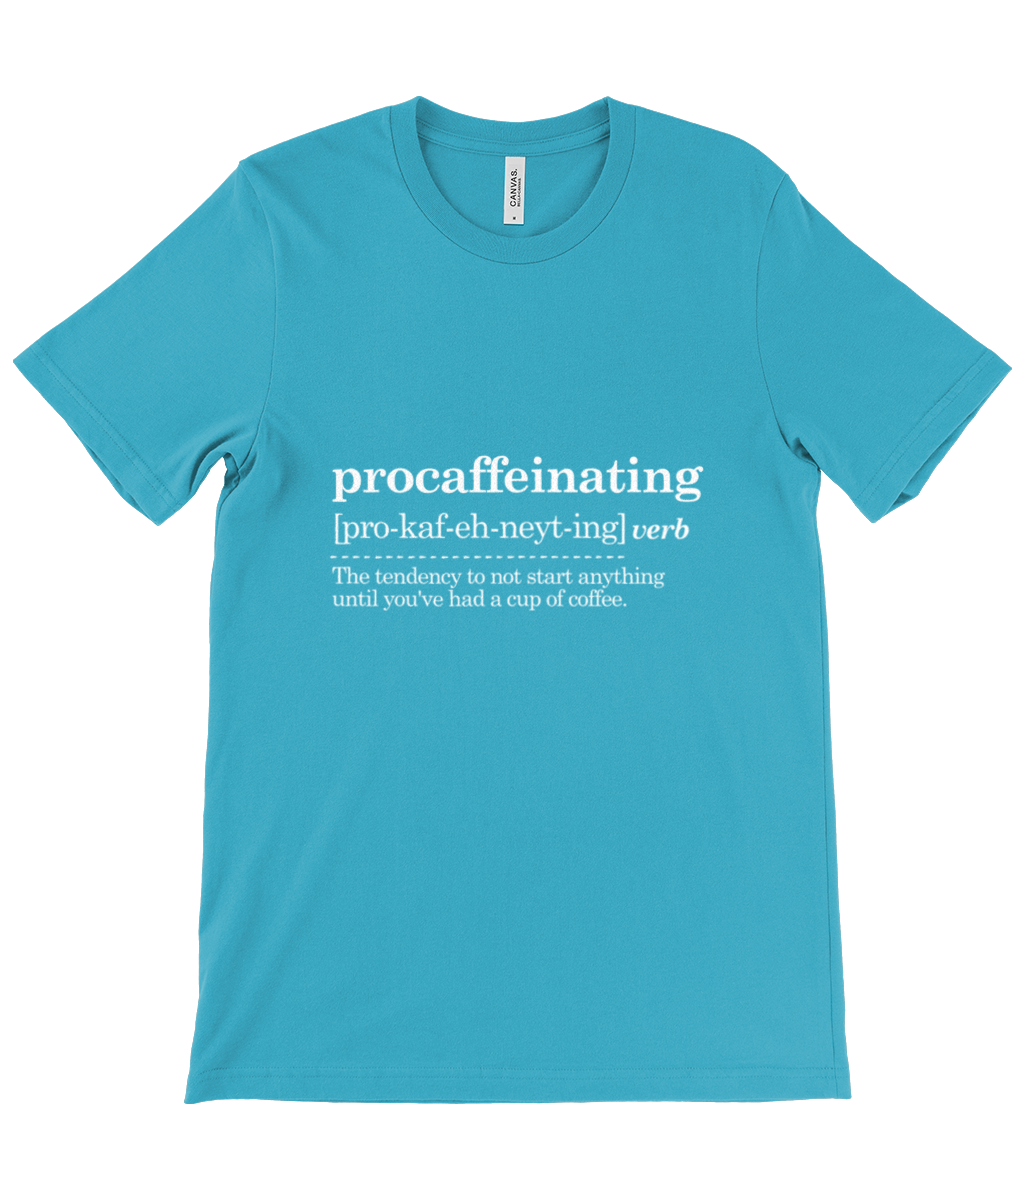 Procaffeinating Dictionary Definition - Canvas Unisex Crew Neck T-Shirt